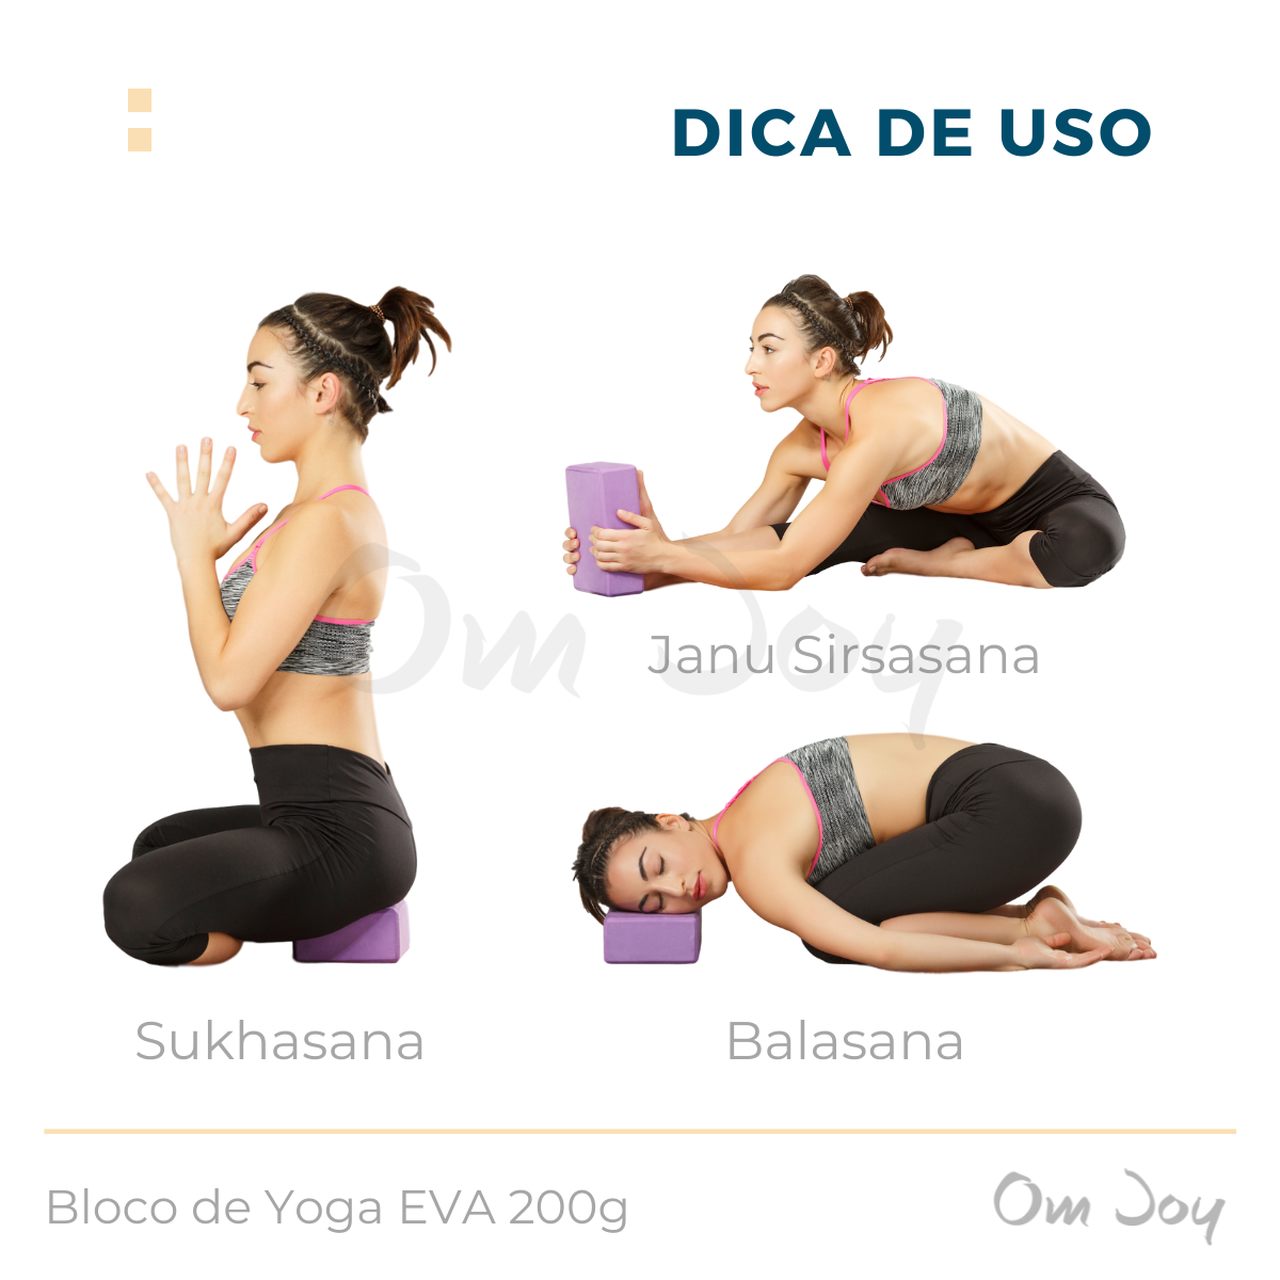 Bloco de Yoga EVA - 200g  - Om Joy